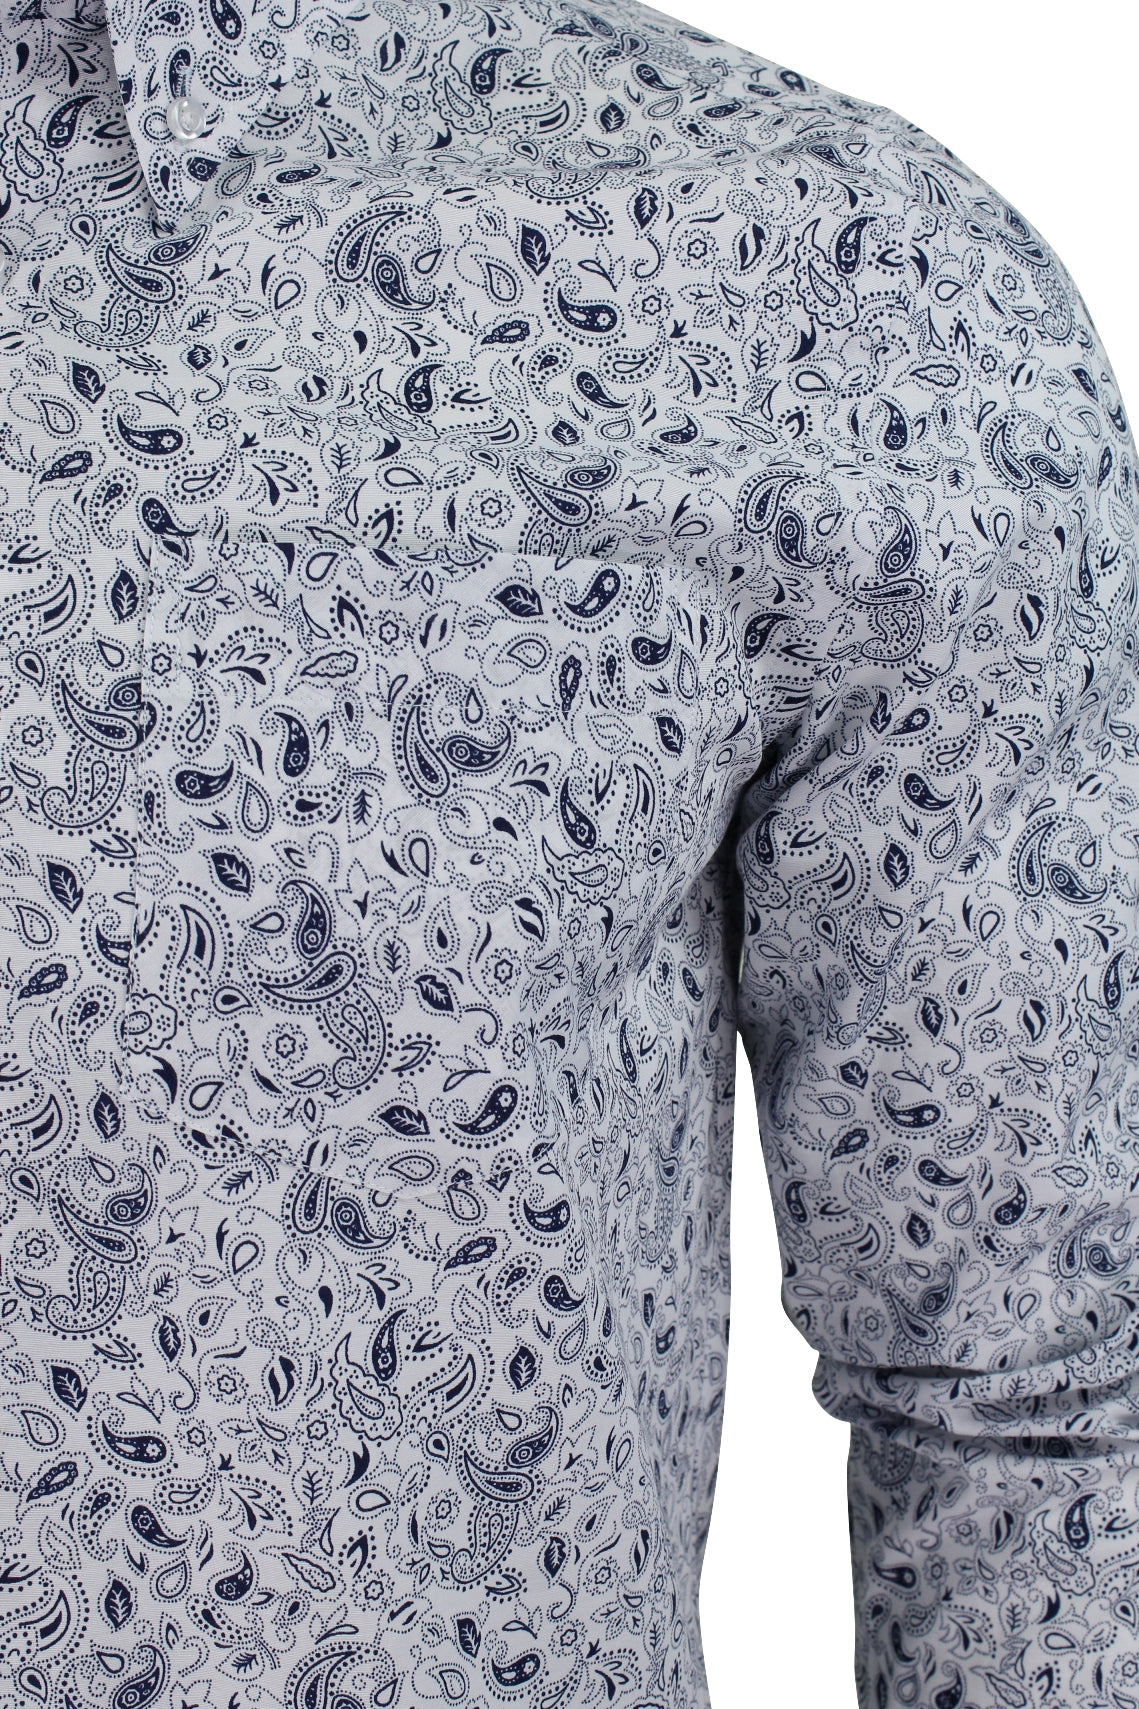 Mens Shirt Paisley by Xact - Fashion Long Sleeve Button Down, 02, Mshx104, Navy/ White